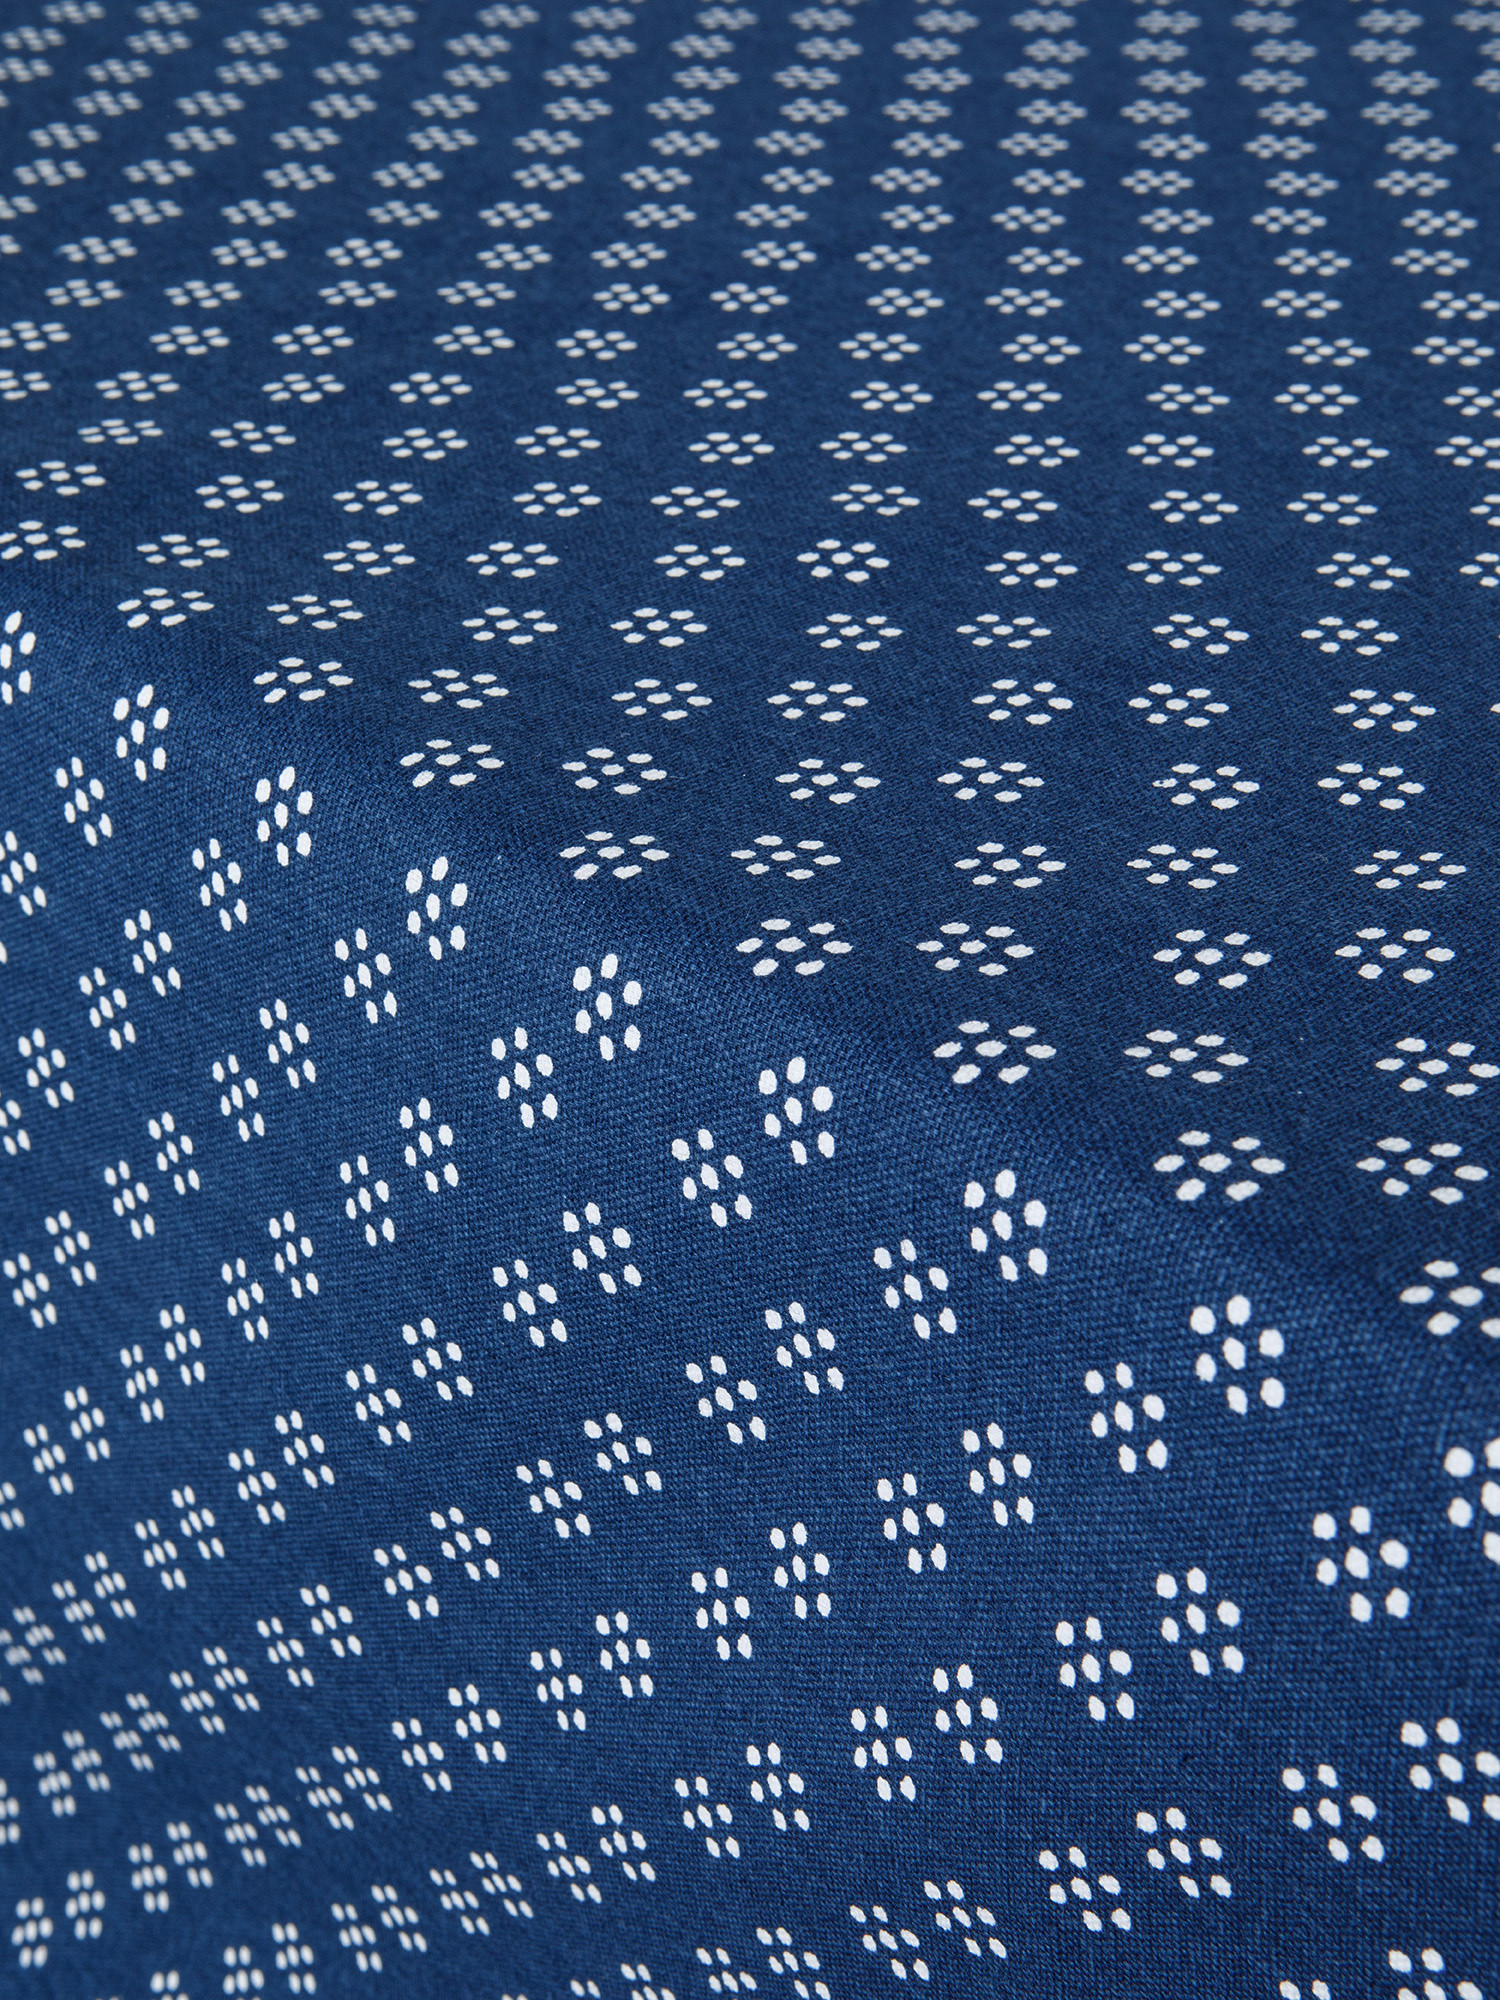 Tovaglia puro cotone stampa dots, Blu, large